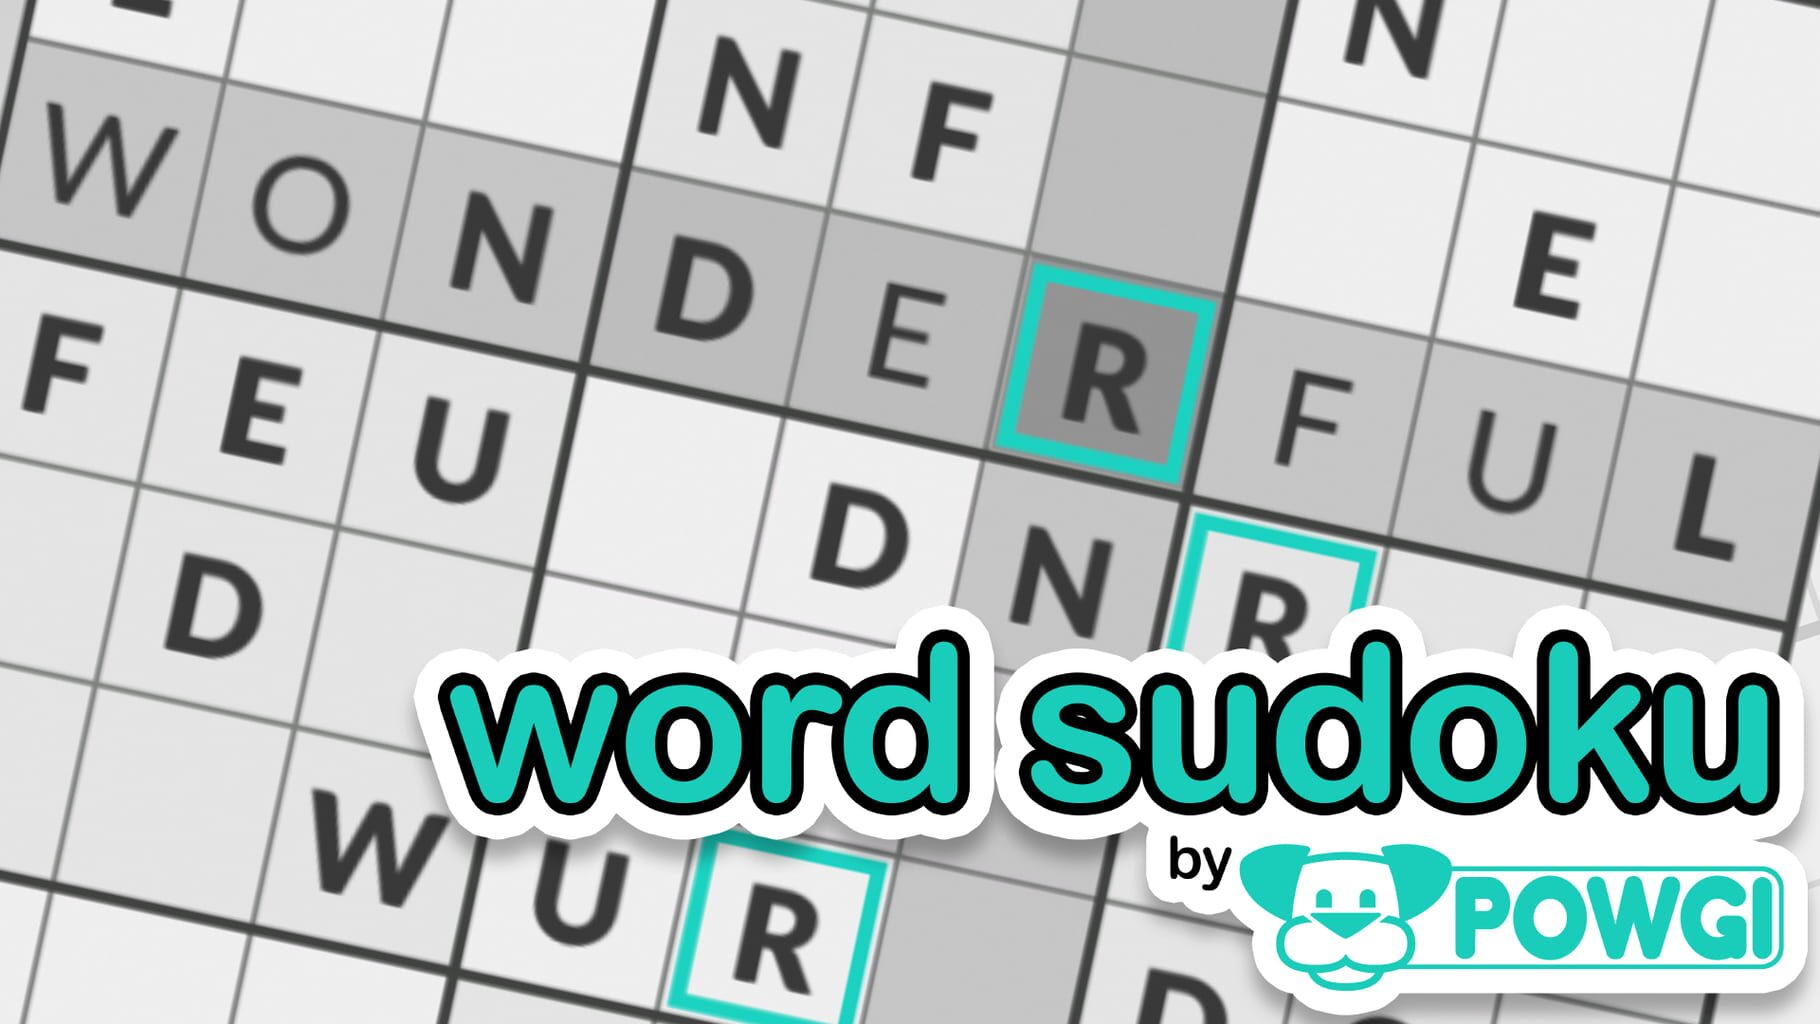 Word Sudoku by Powgi artwork